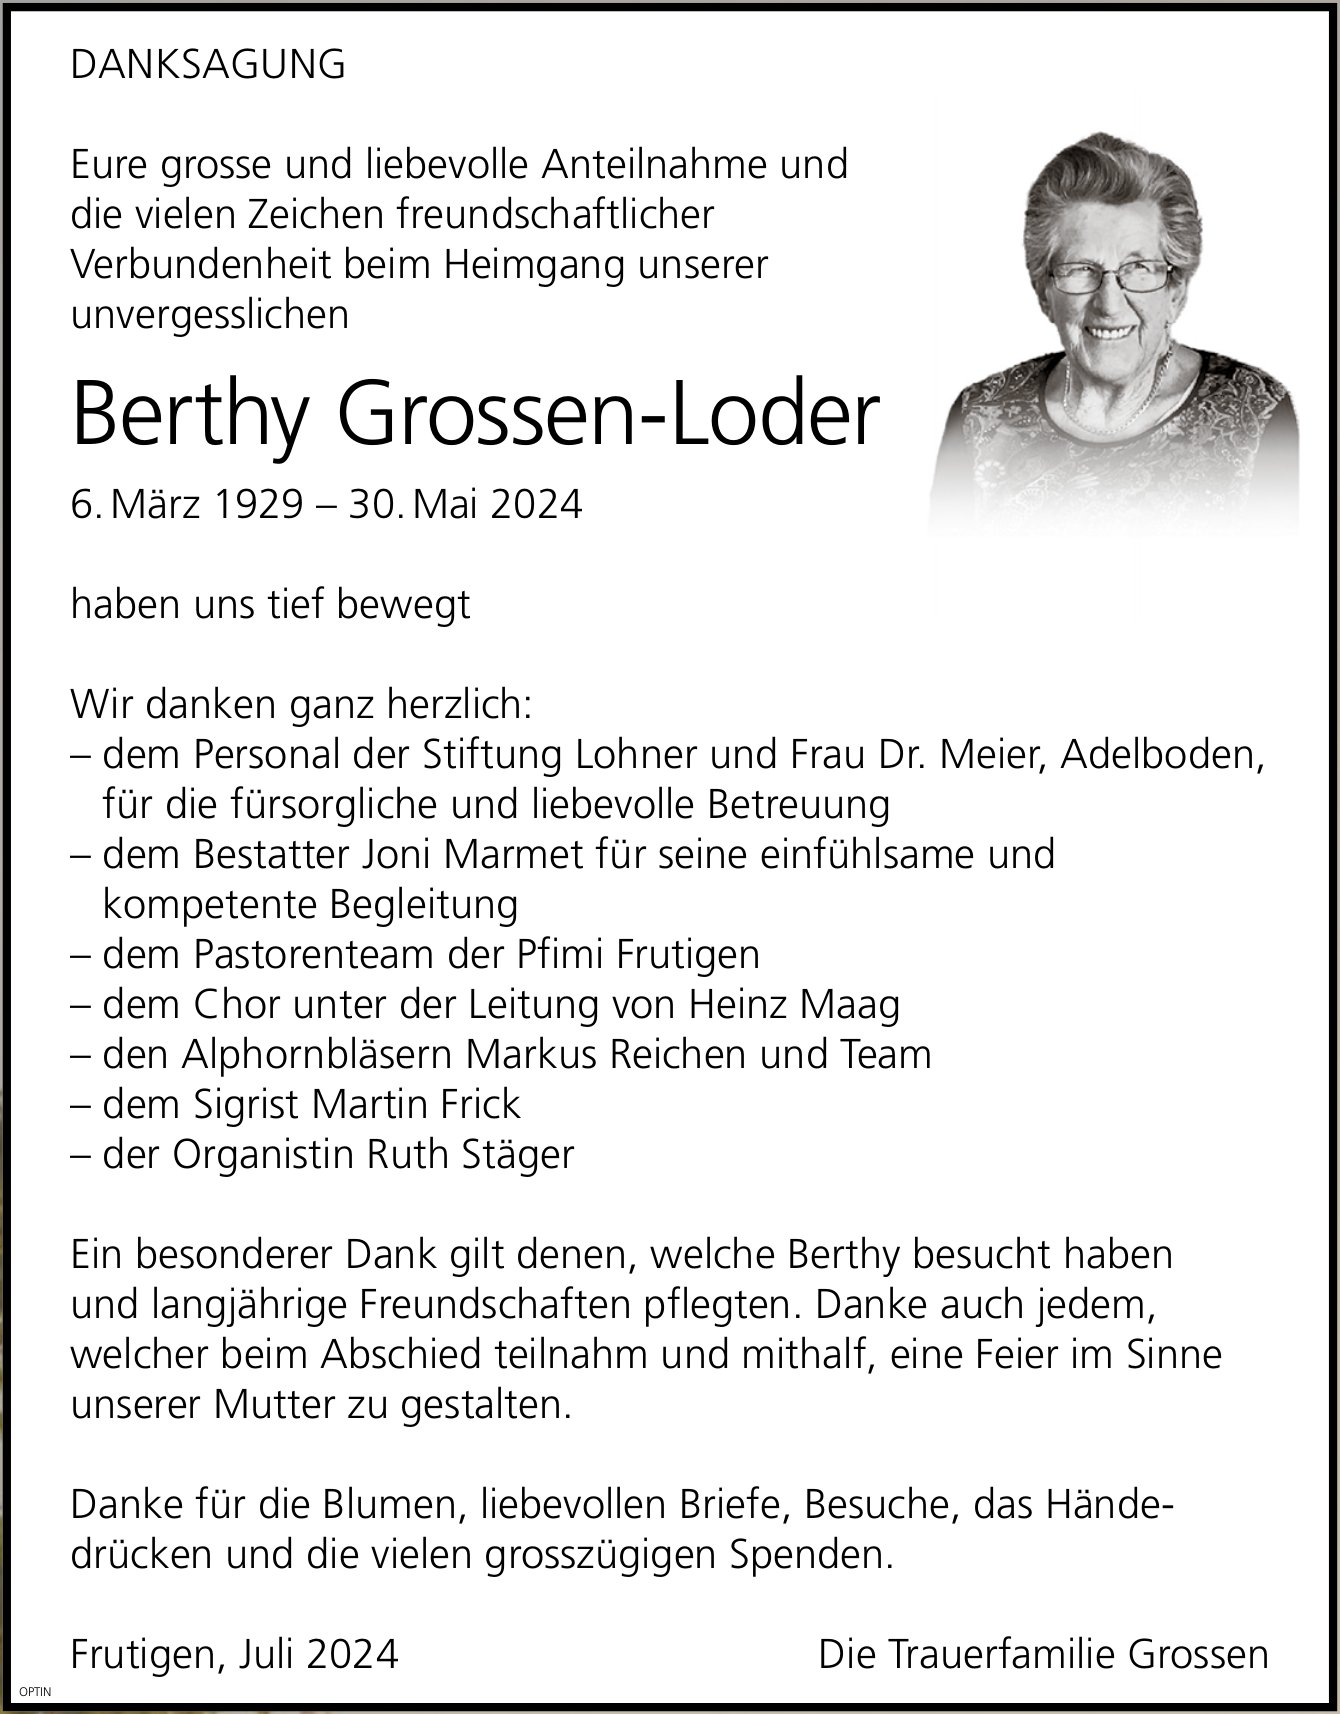 Berthy Grossen-Loder, im Juli 2024 / DS